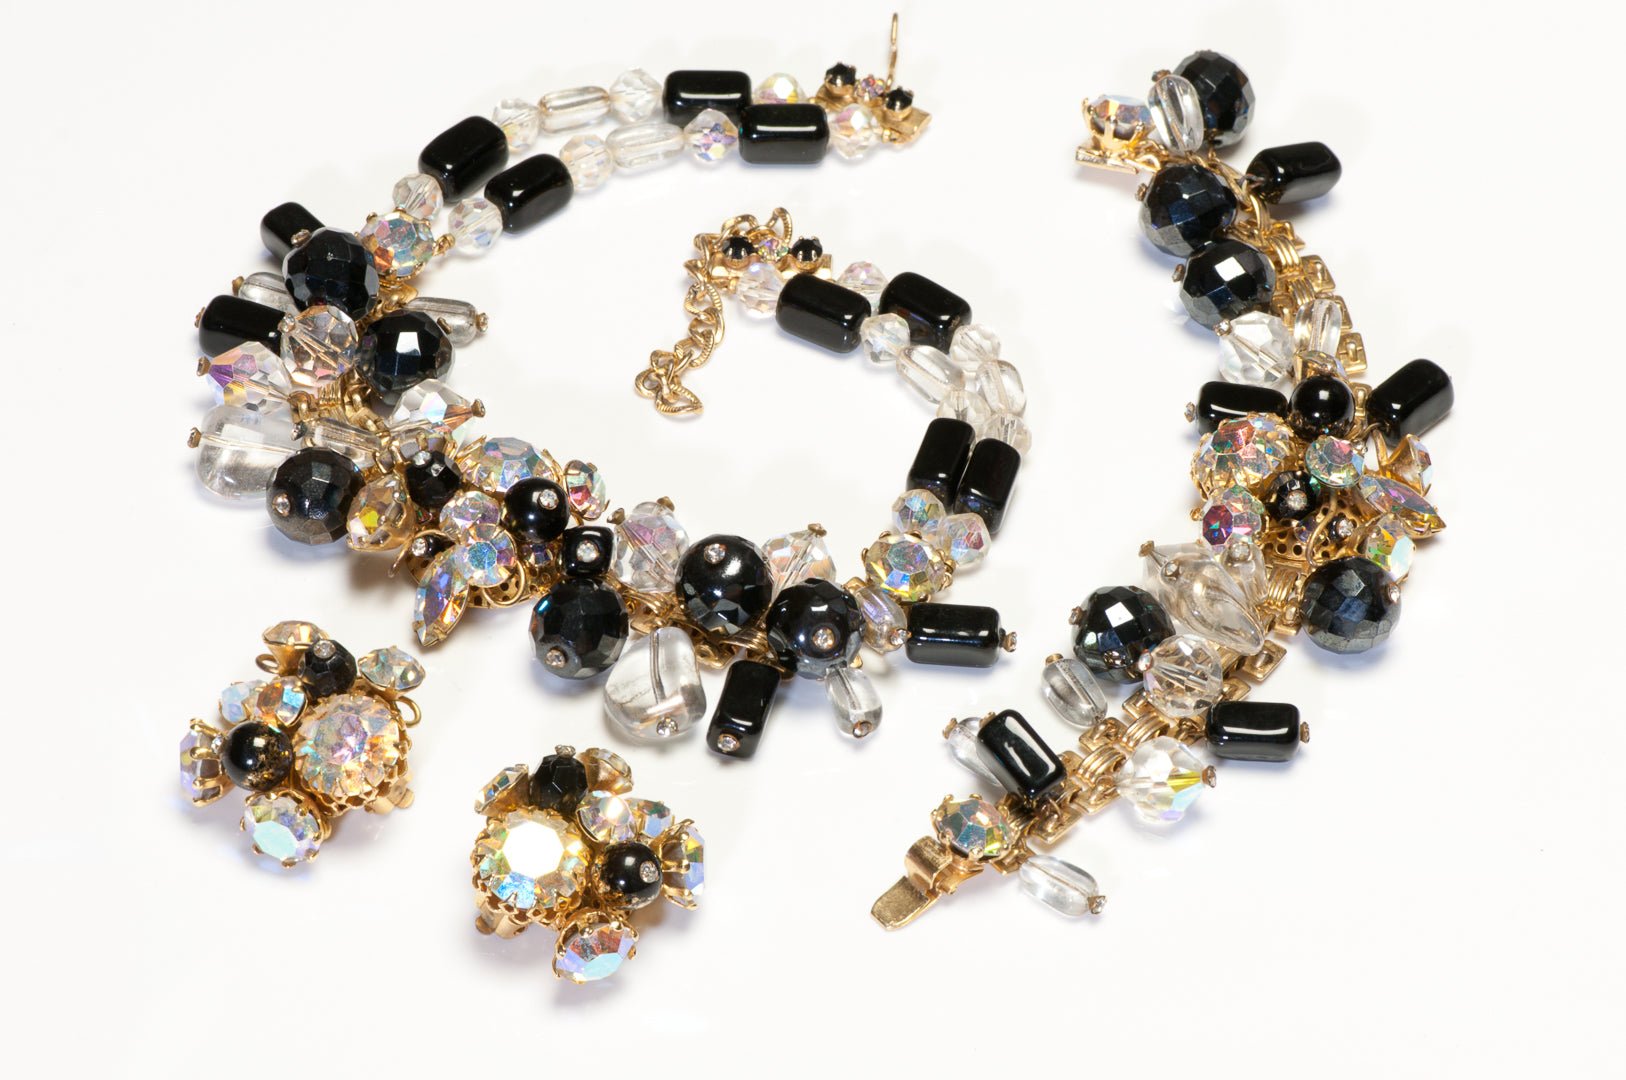 Vintage 1950's Black Glass Beads Aurora Borealis Crystal Necklace Bracelet Earrings Set